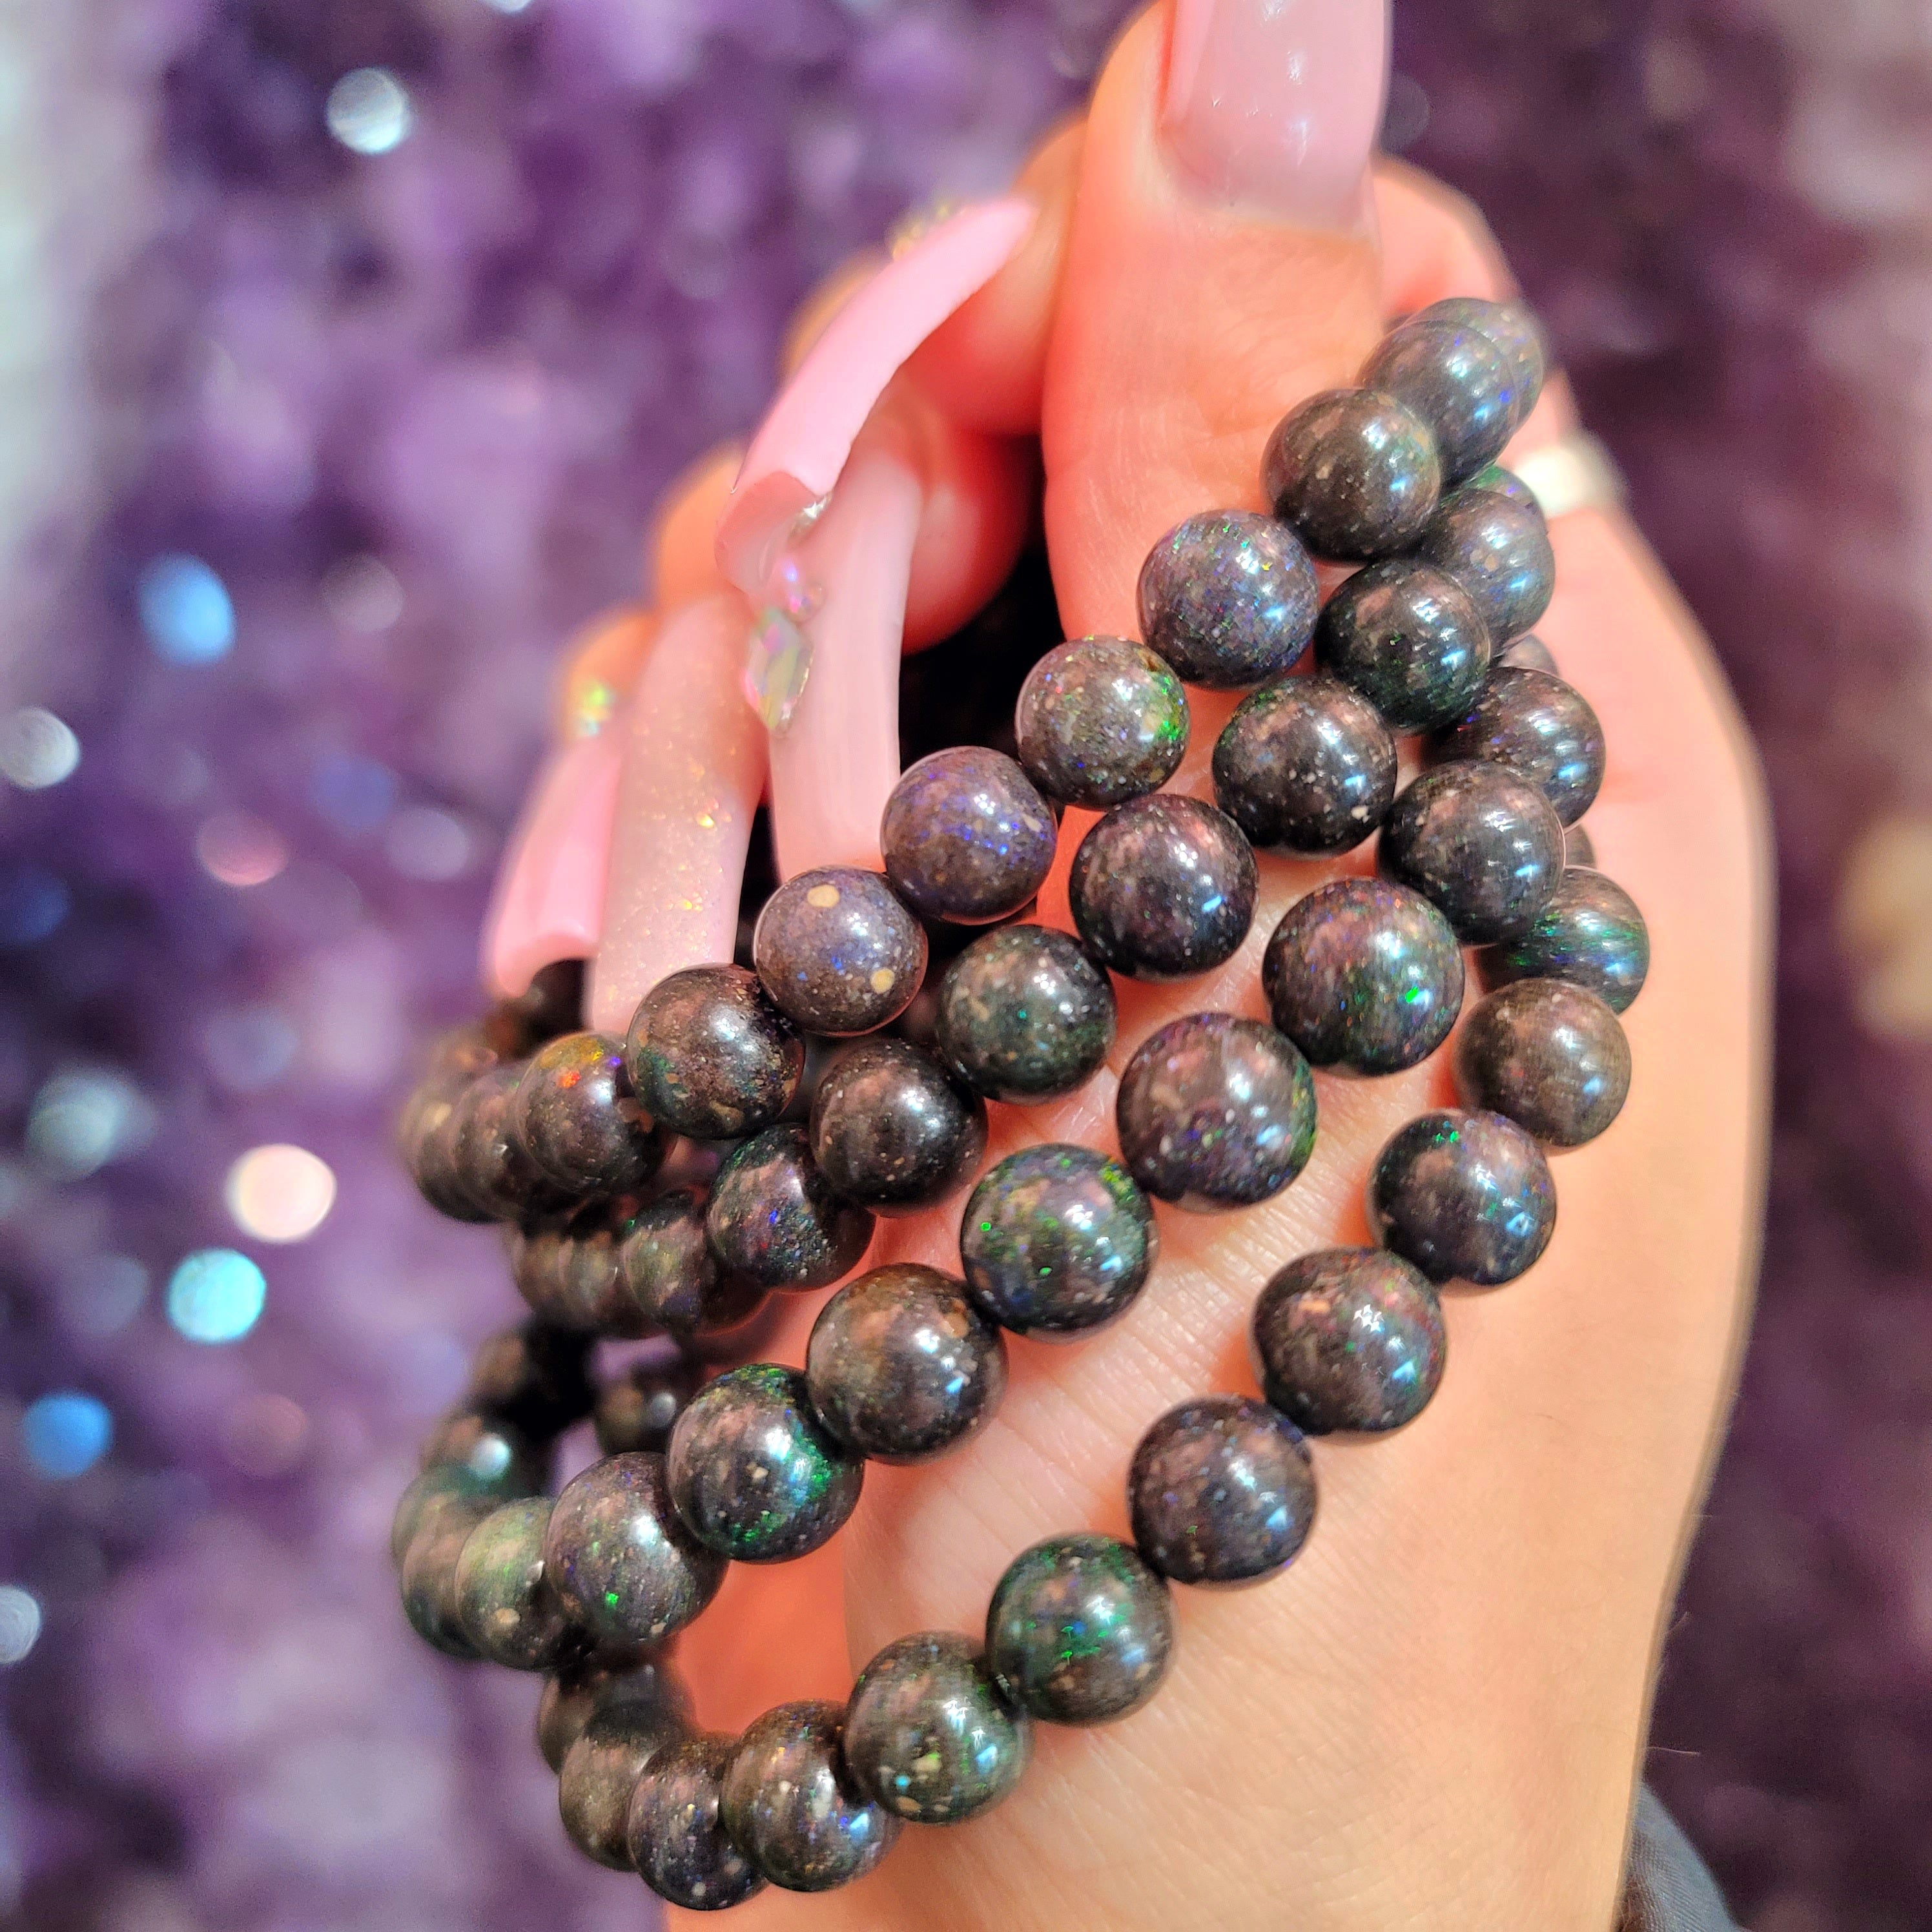 Opal Matrix (High Quality) Bracelet for Creativity, Joy and Self Discovery